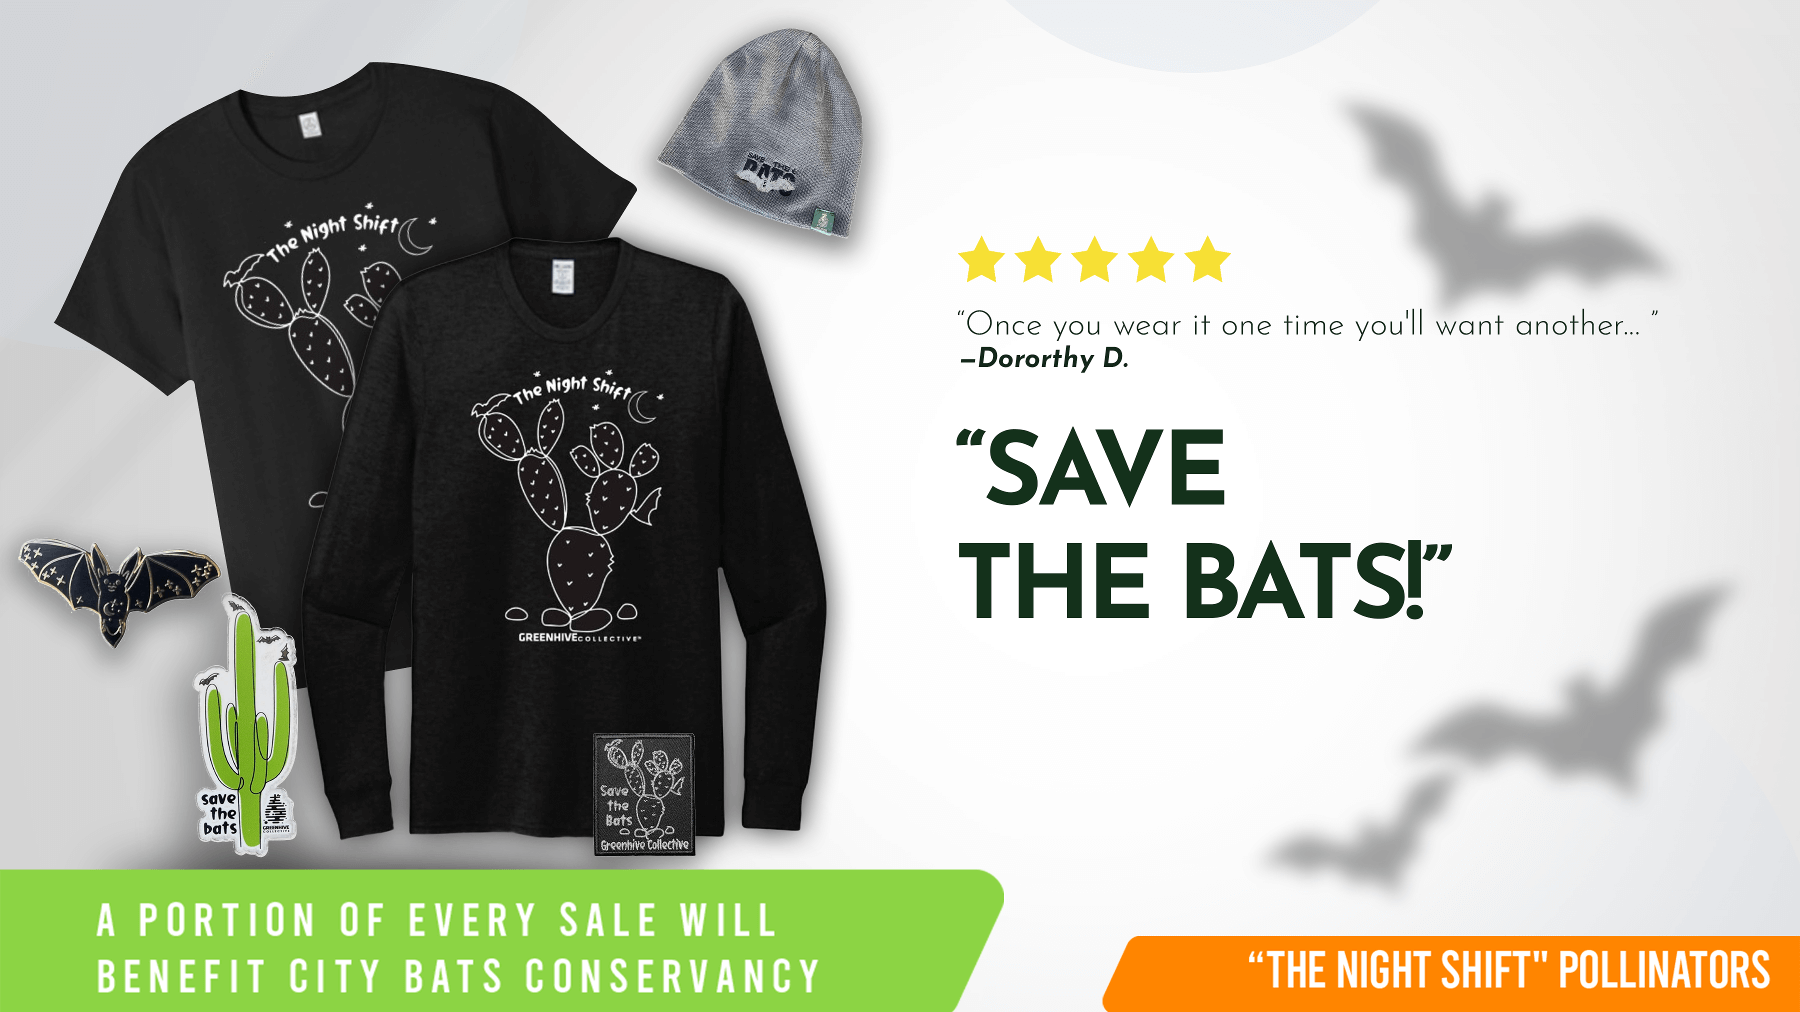 Save The Bats!